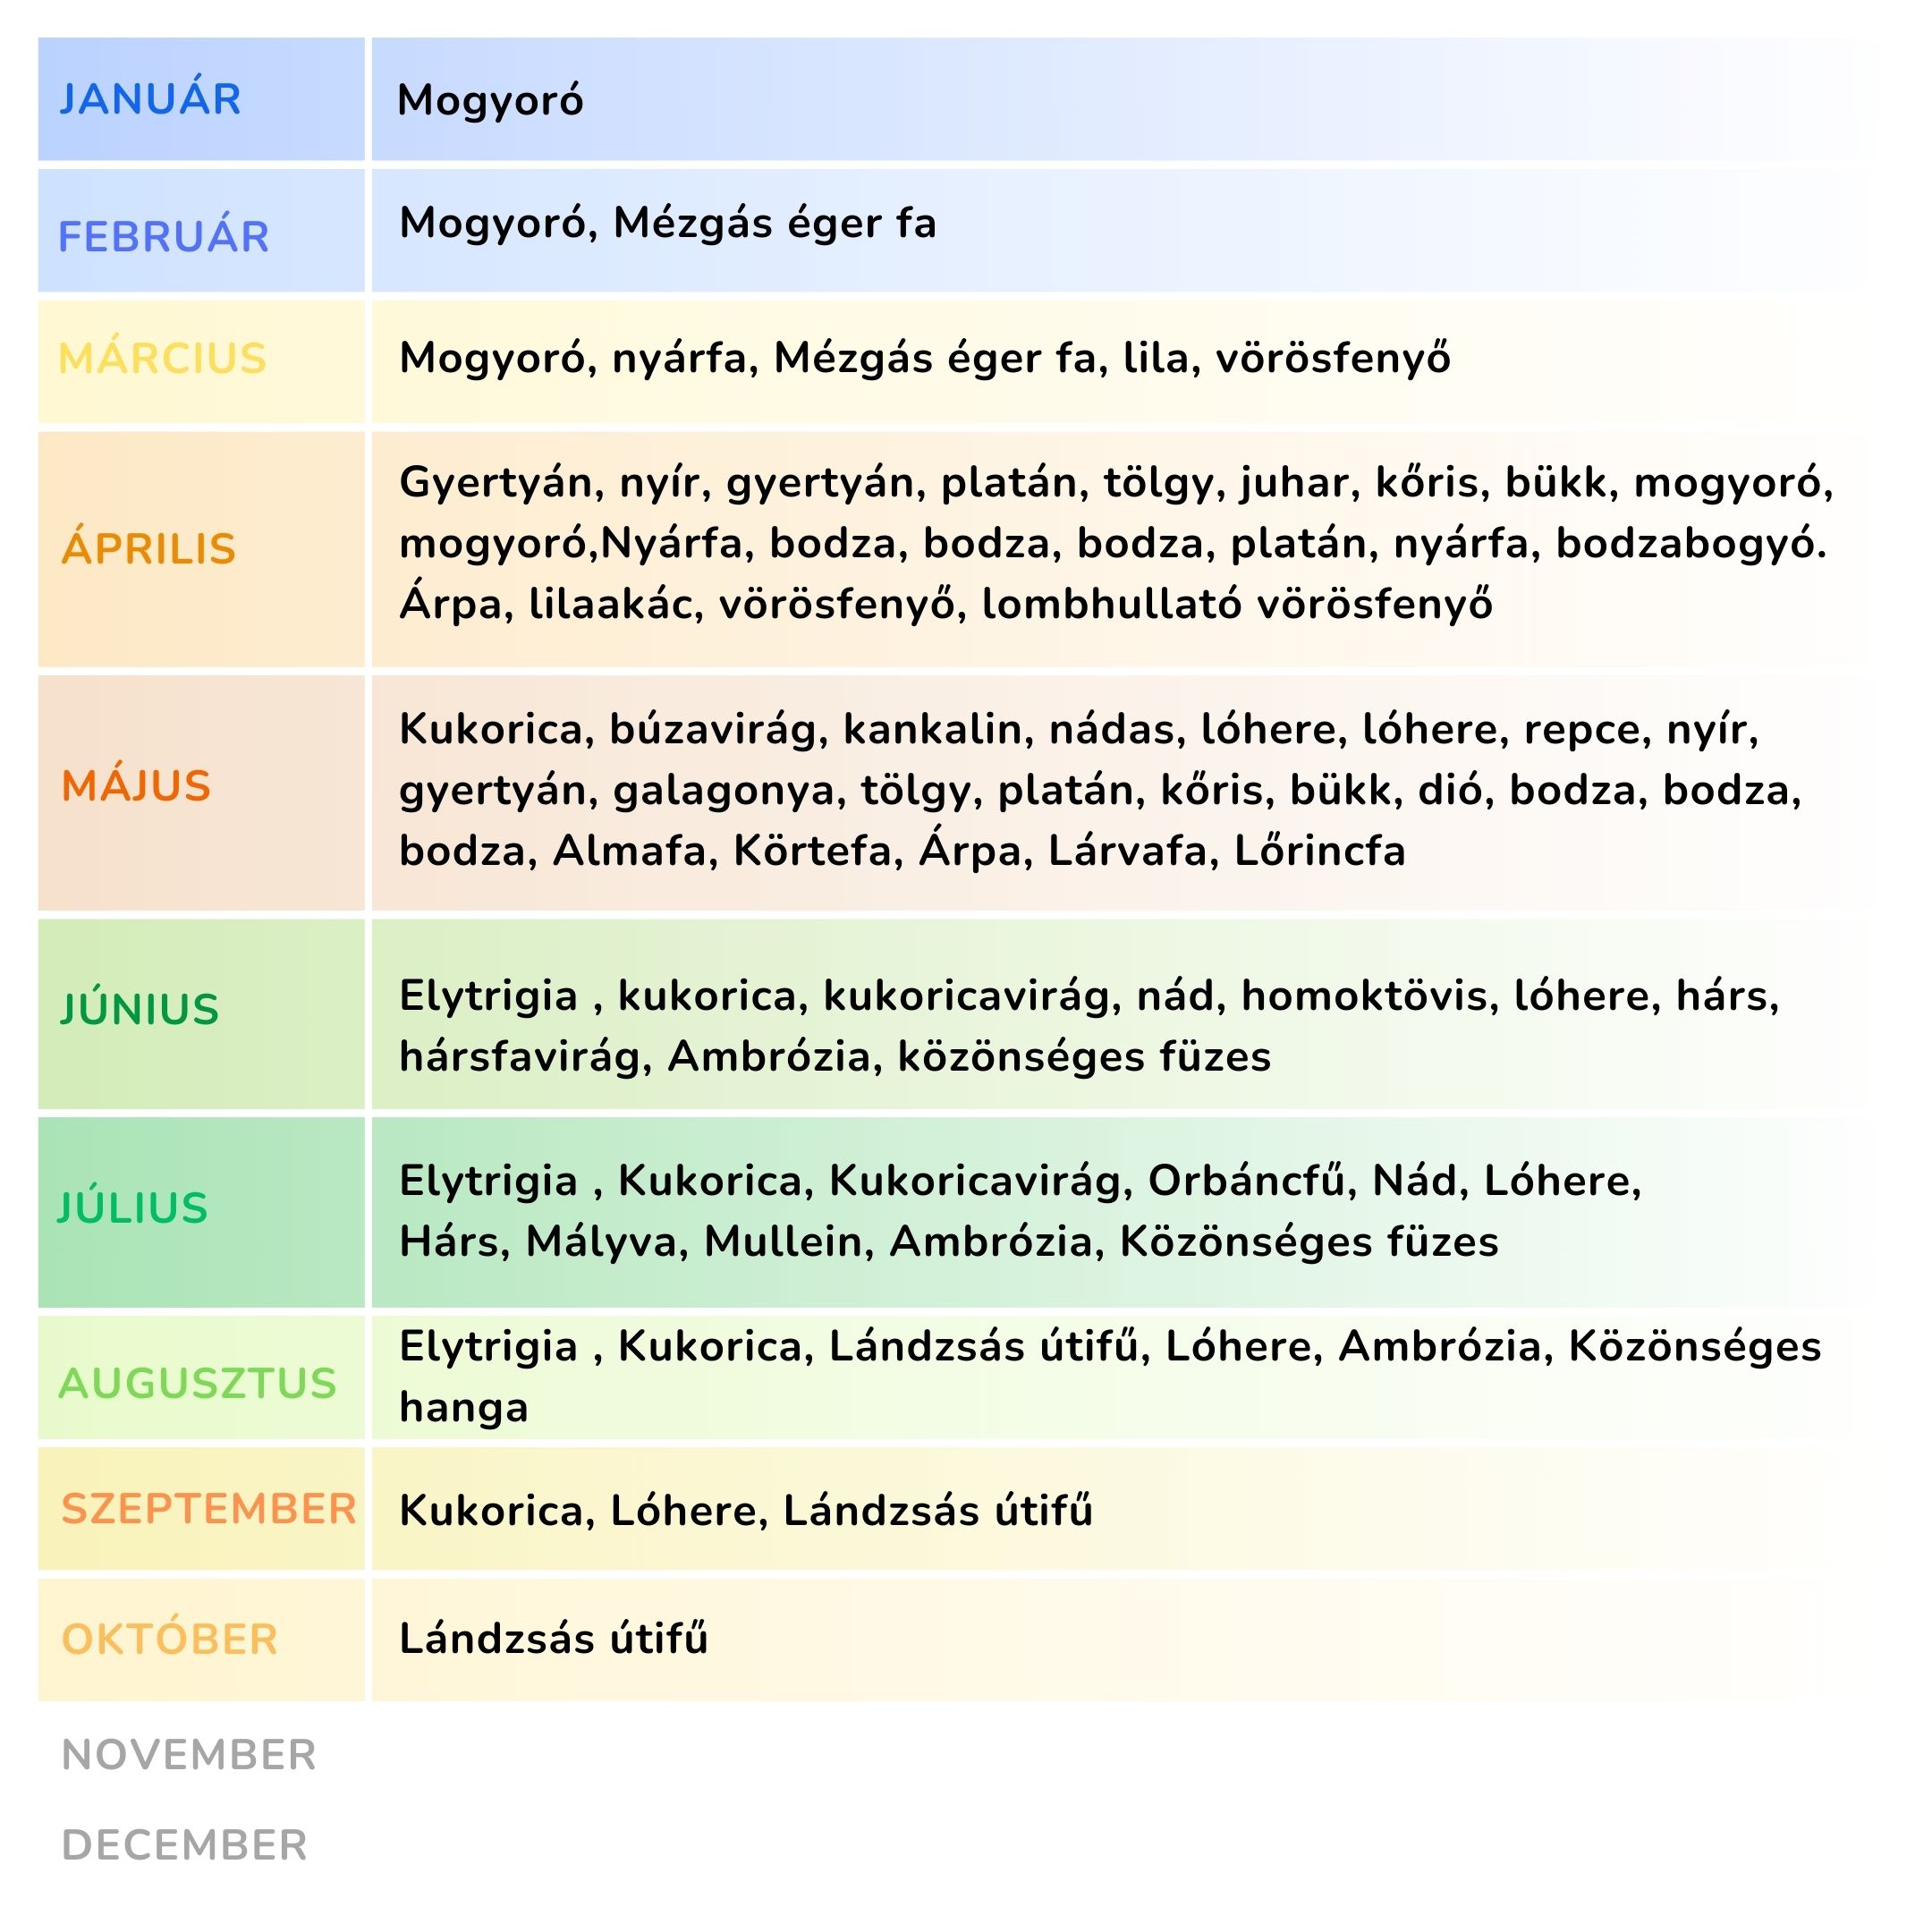 (Maďarština) Kalendar alergii